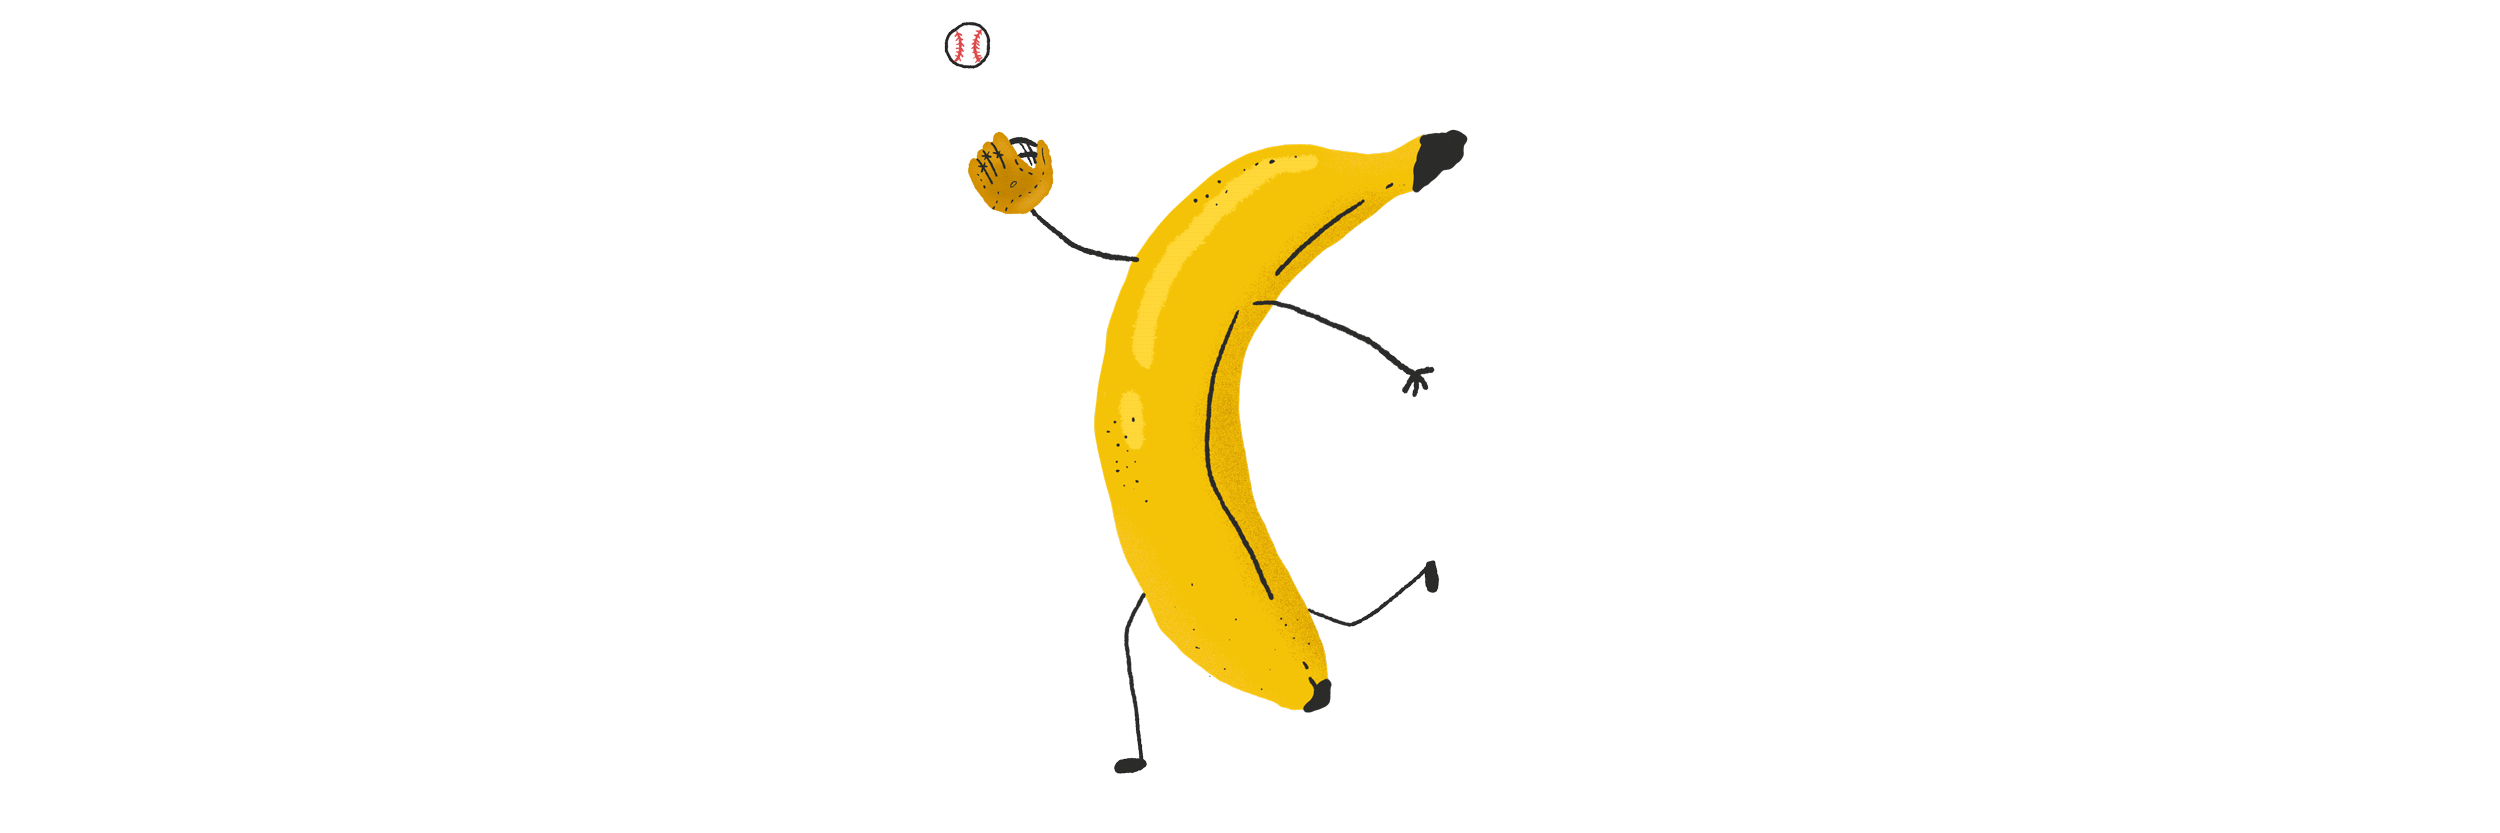 An animation of a cartoon banana catching a baseball.